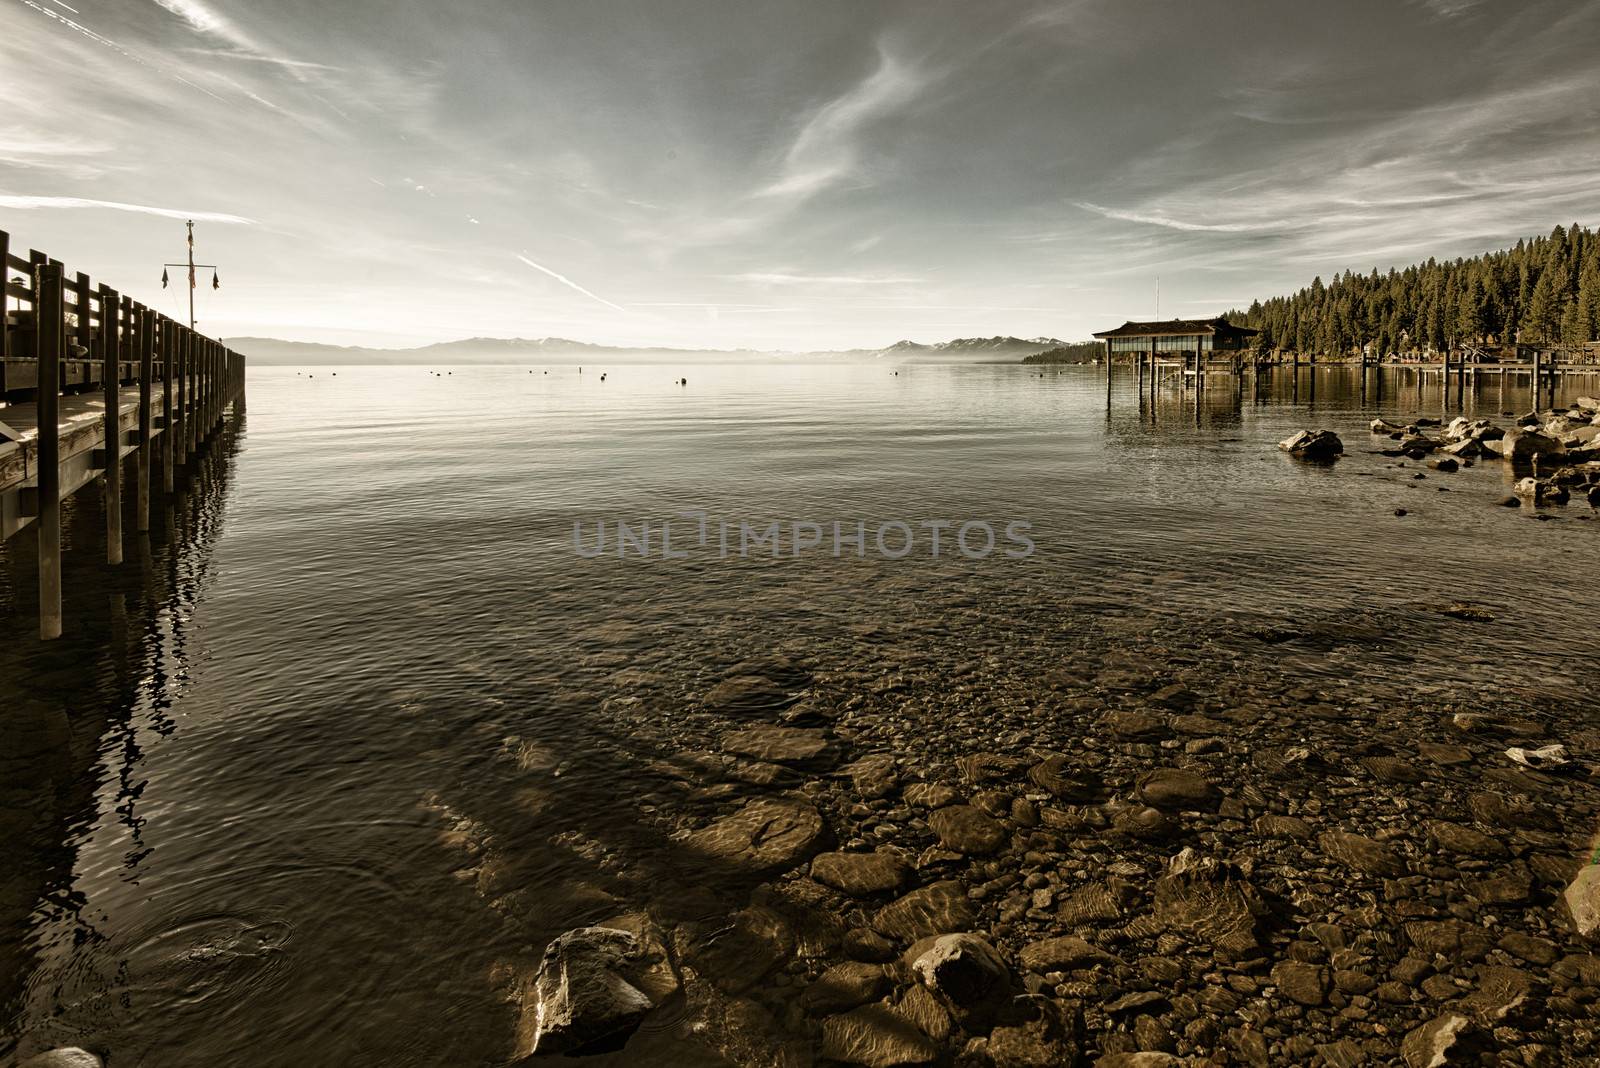 Pier in a lake, Carnelian Bay, Lake Tahoe, California, USA